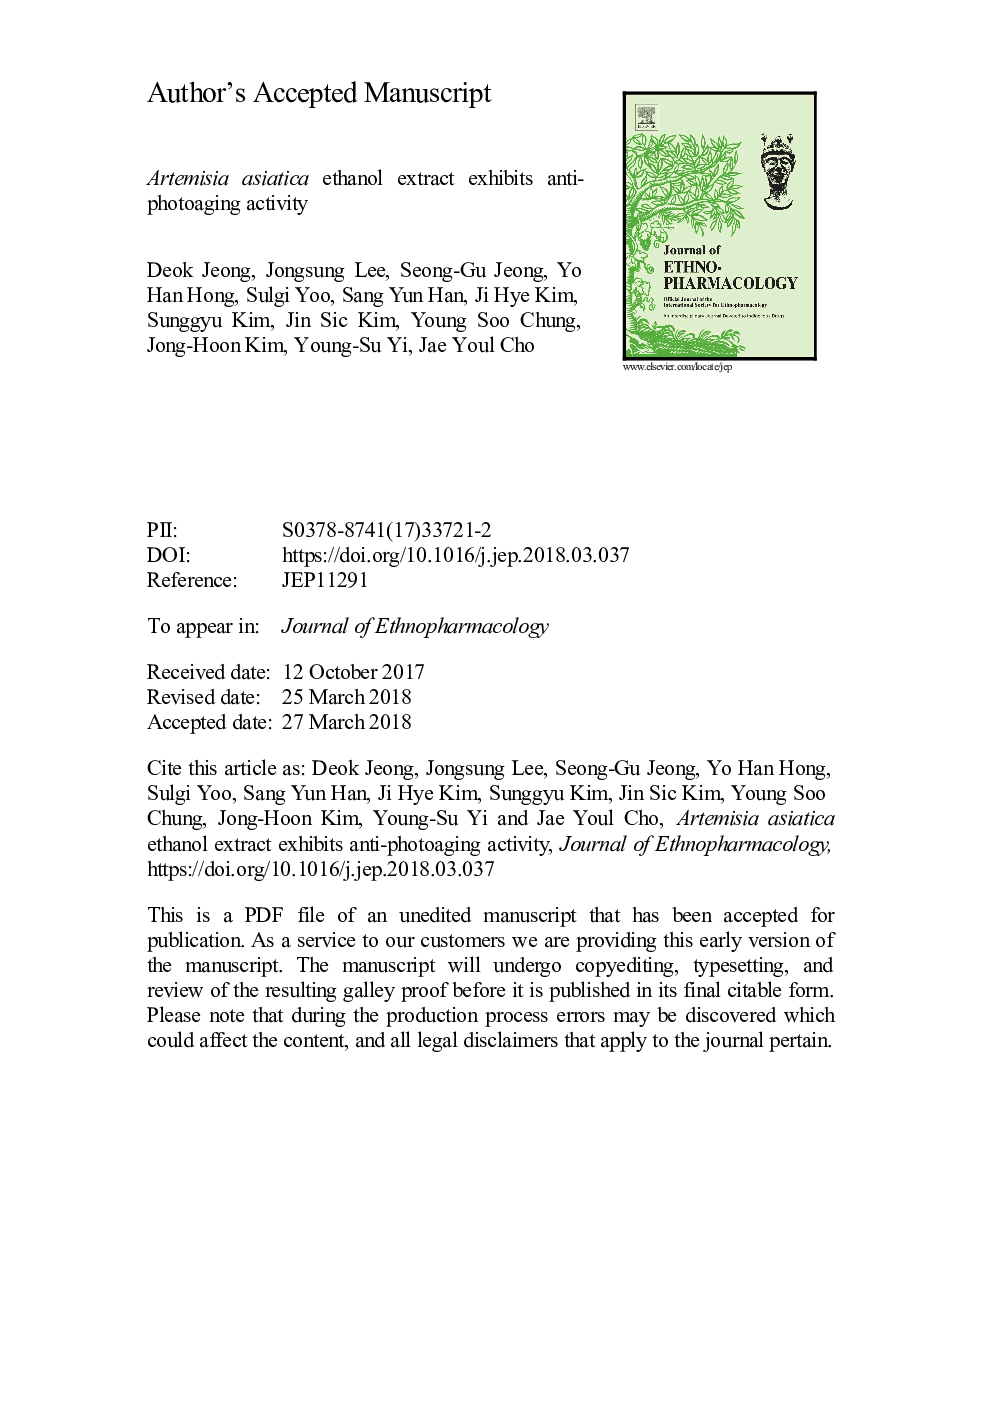 Artemisia asiatica ethanol extract exhibits anti-photoaging activity